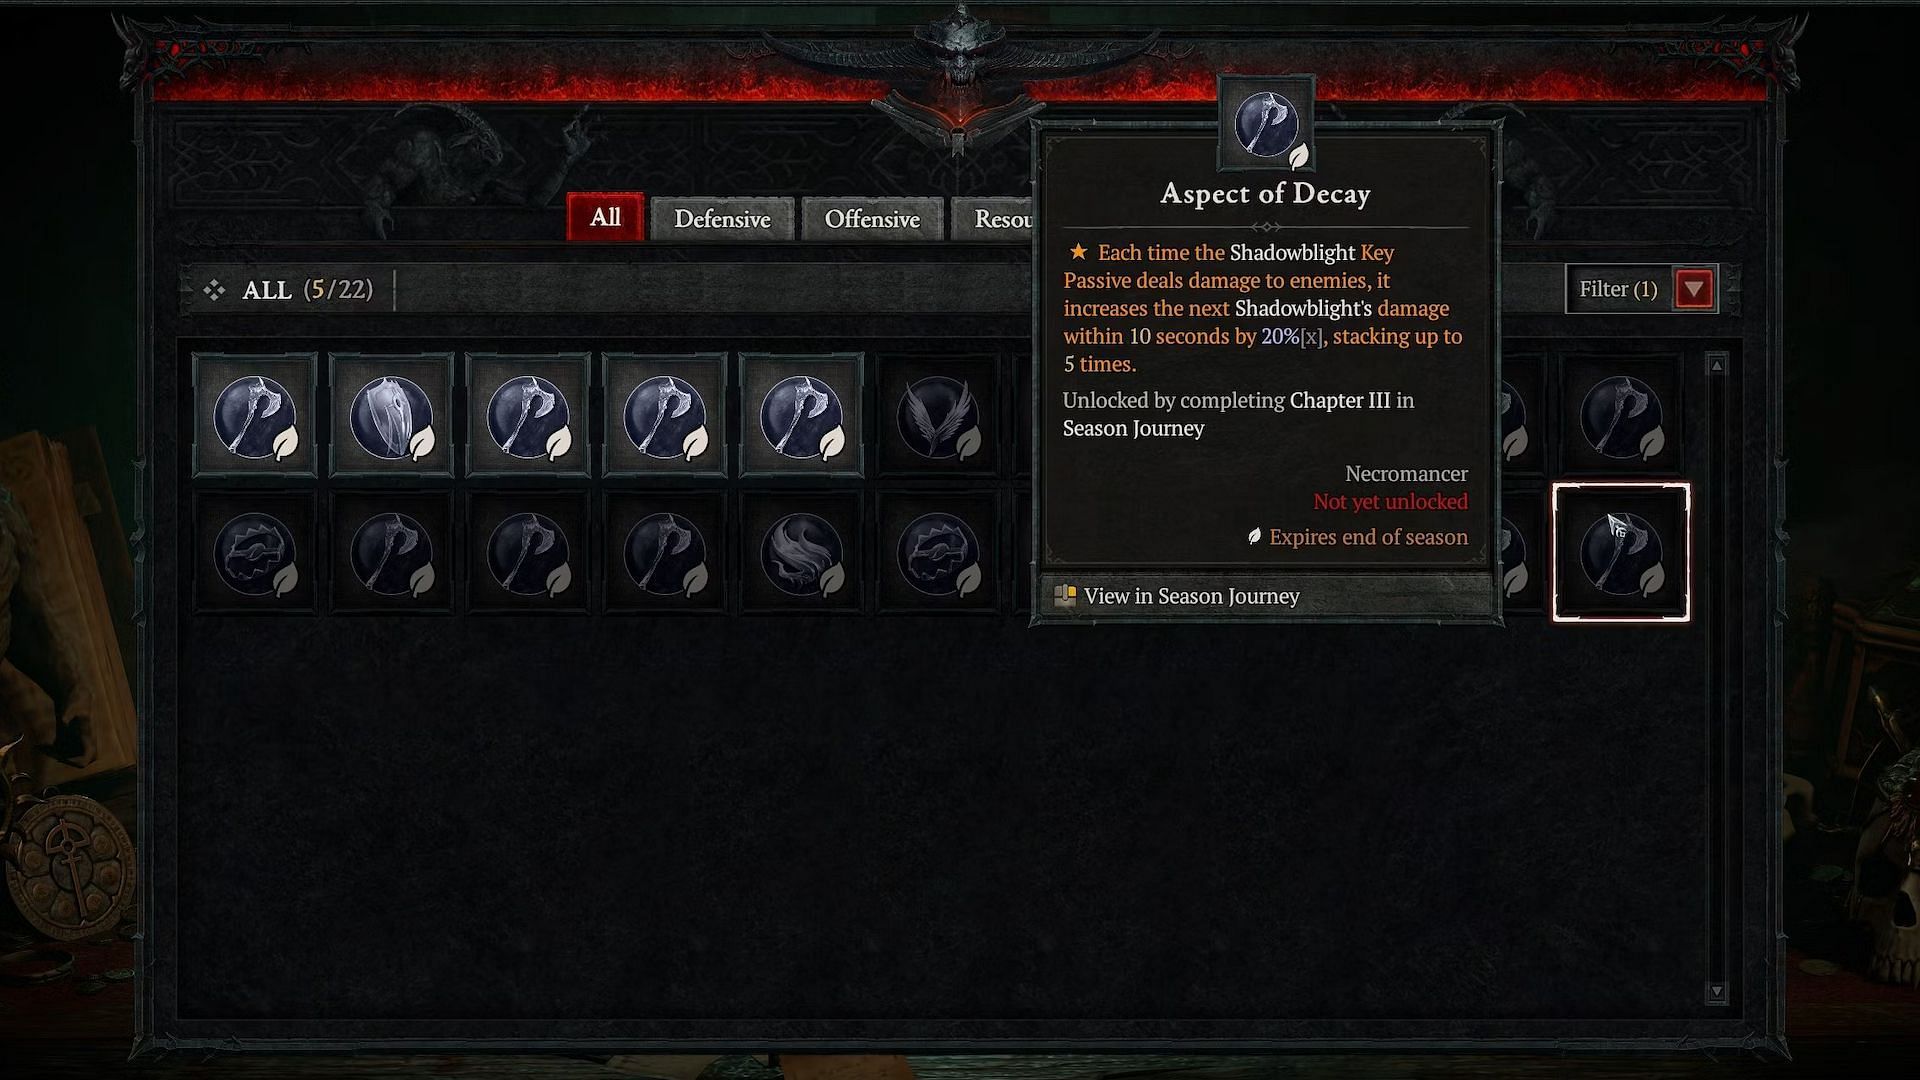 Aspect of Decay increases Shadowblight damage (Image via Diablo 4/Blizzard Entertainment)